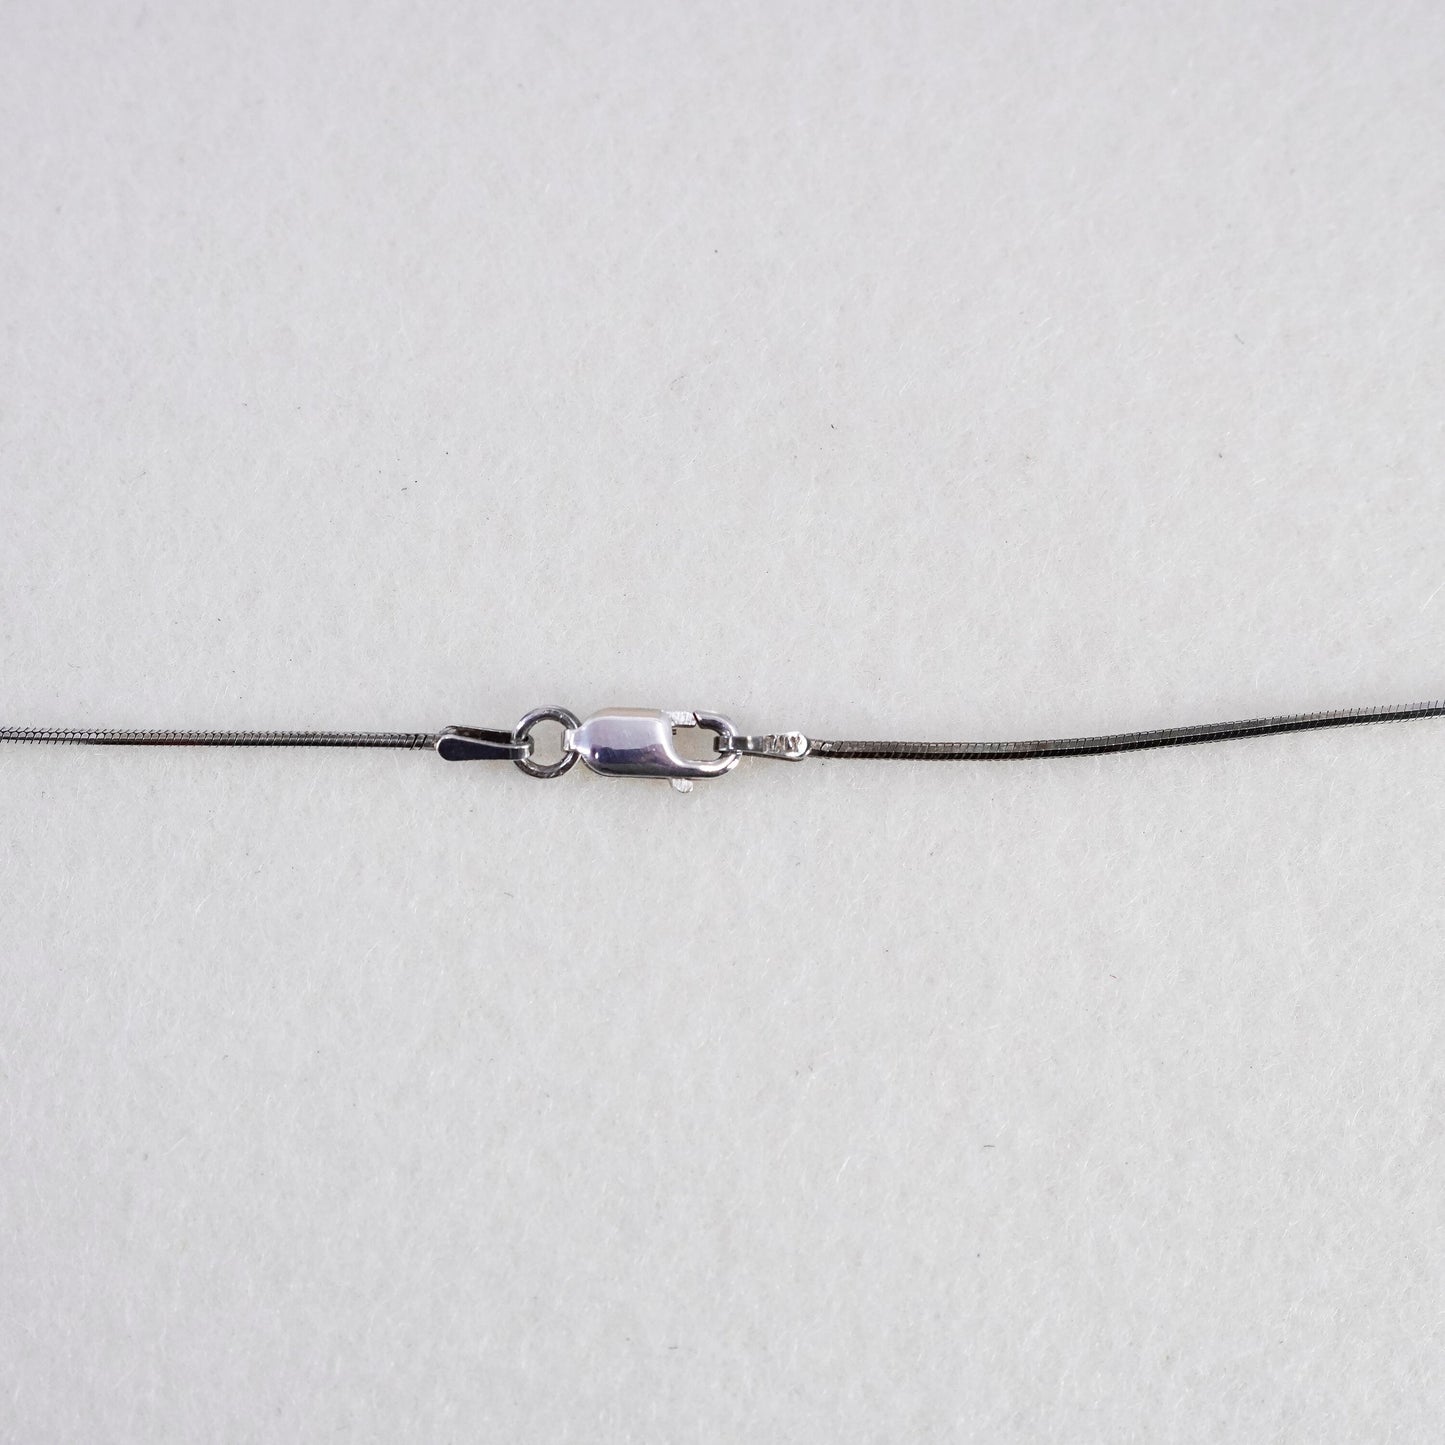 18”, vtg Sterling 925 silver handmade snake necklace with fringe bead pendant